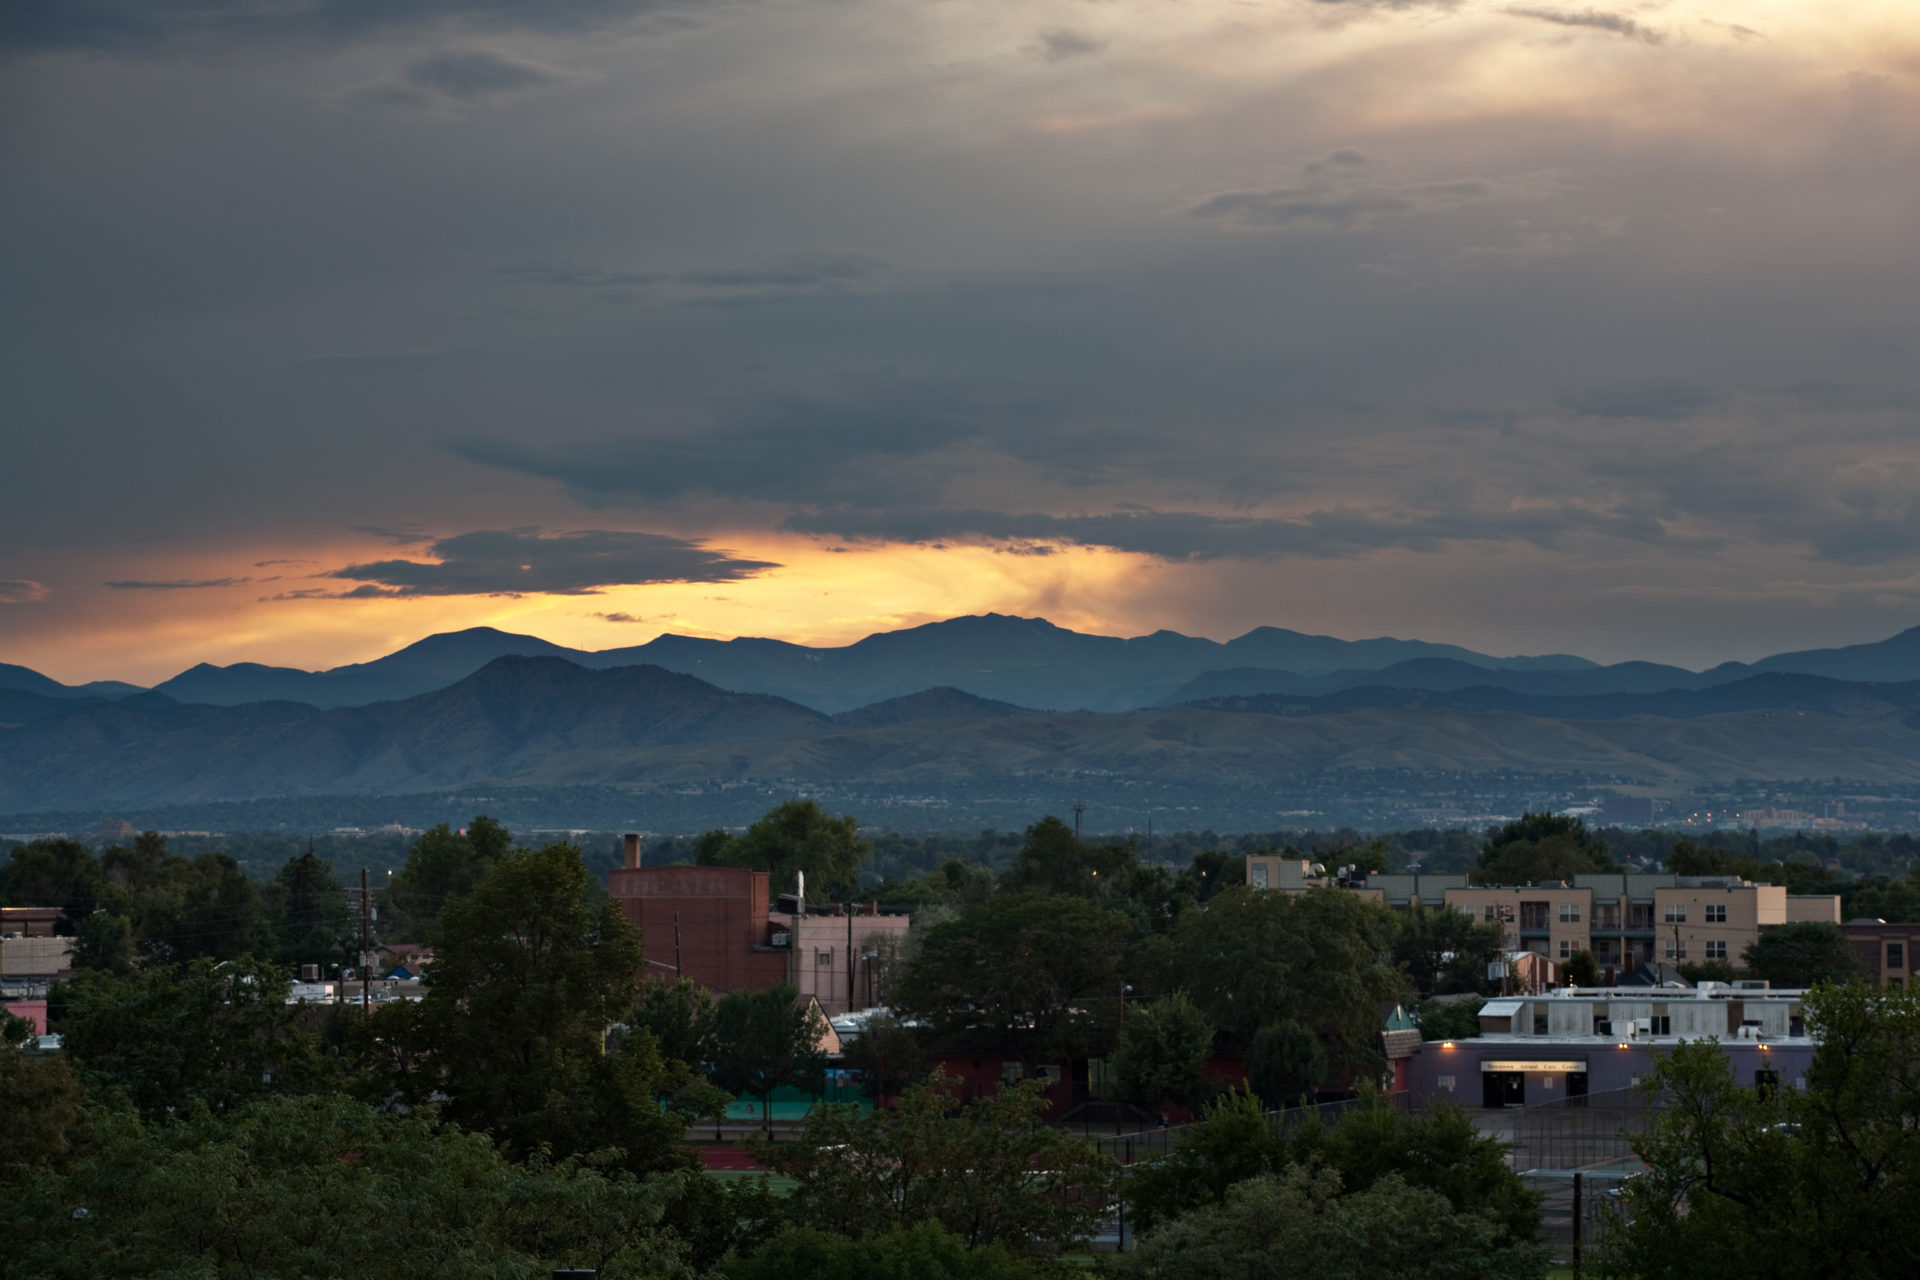 Mount Evans sunset - August 24, 2011